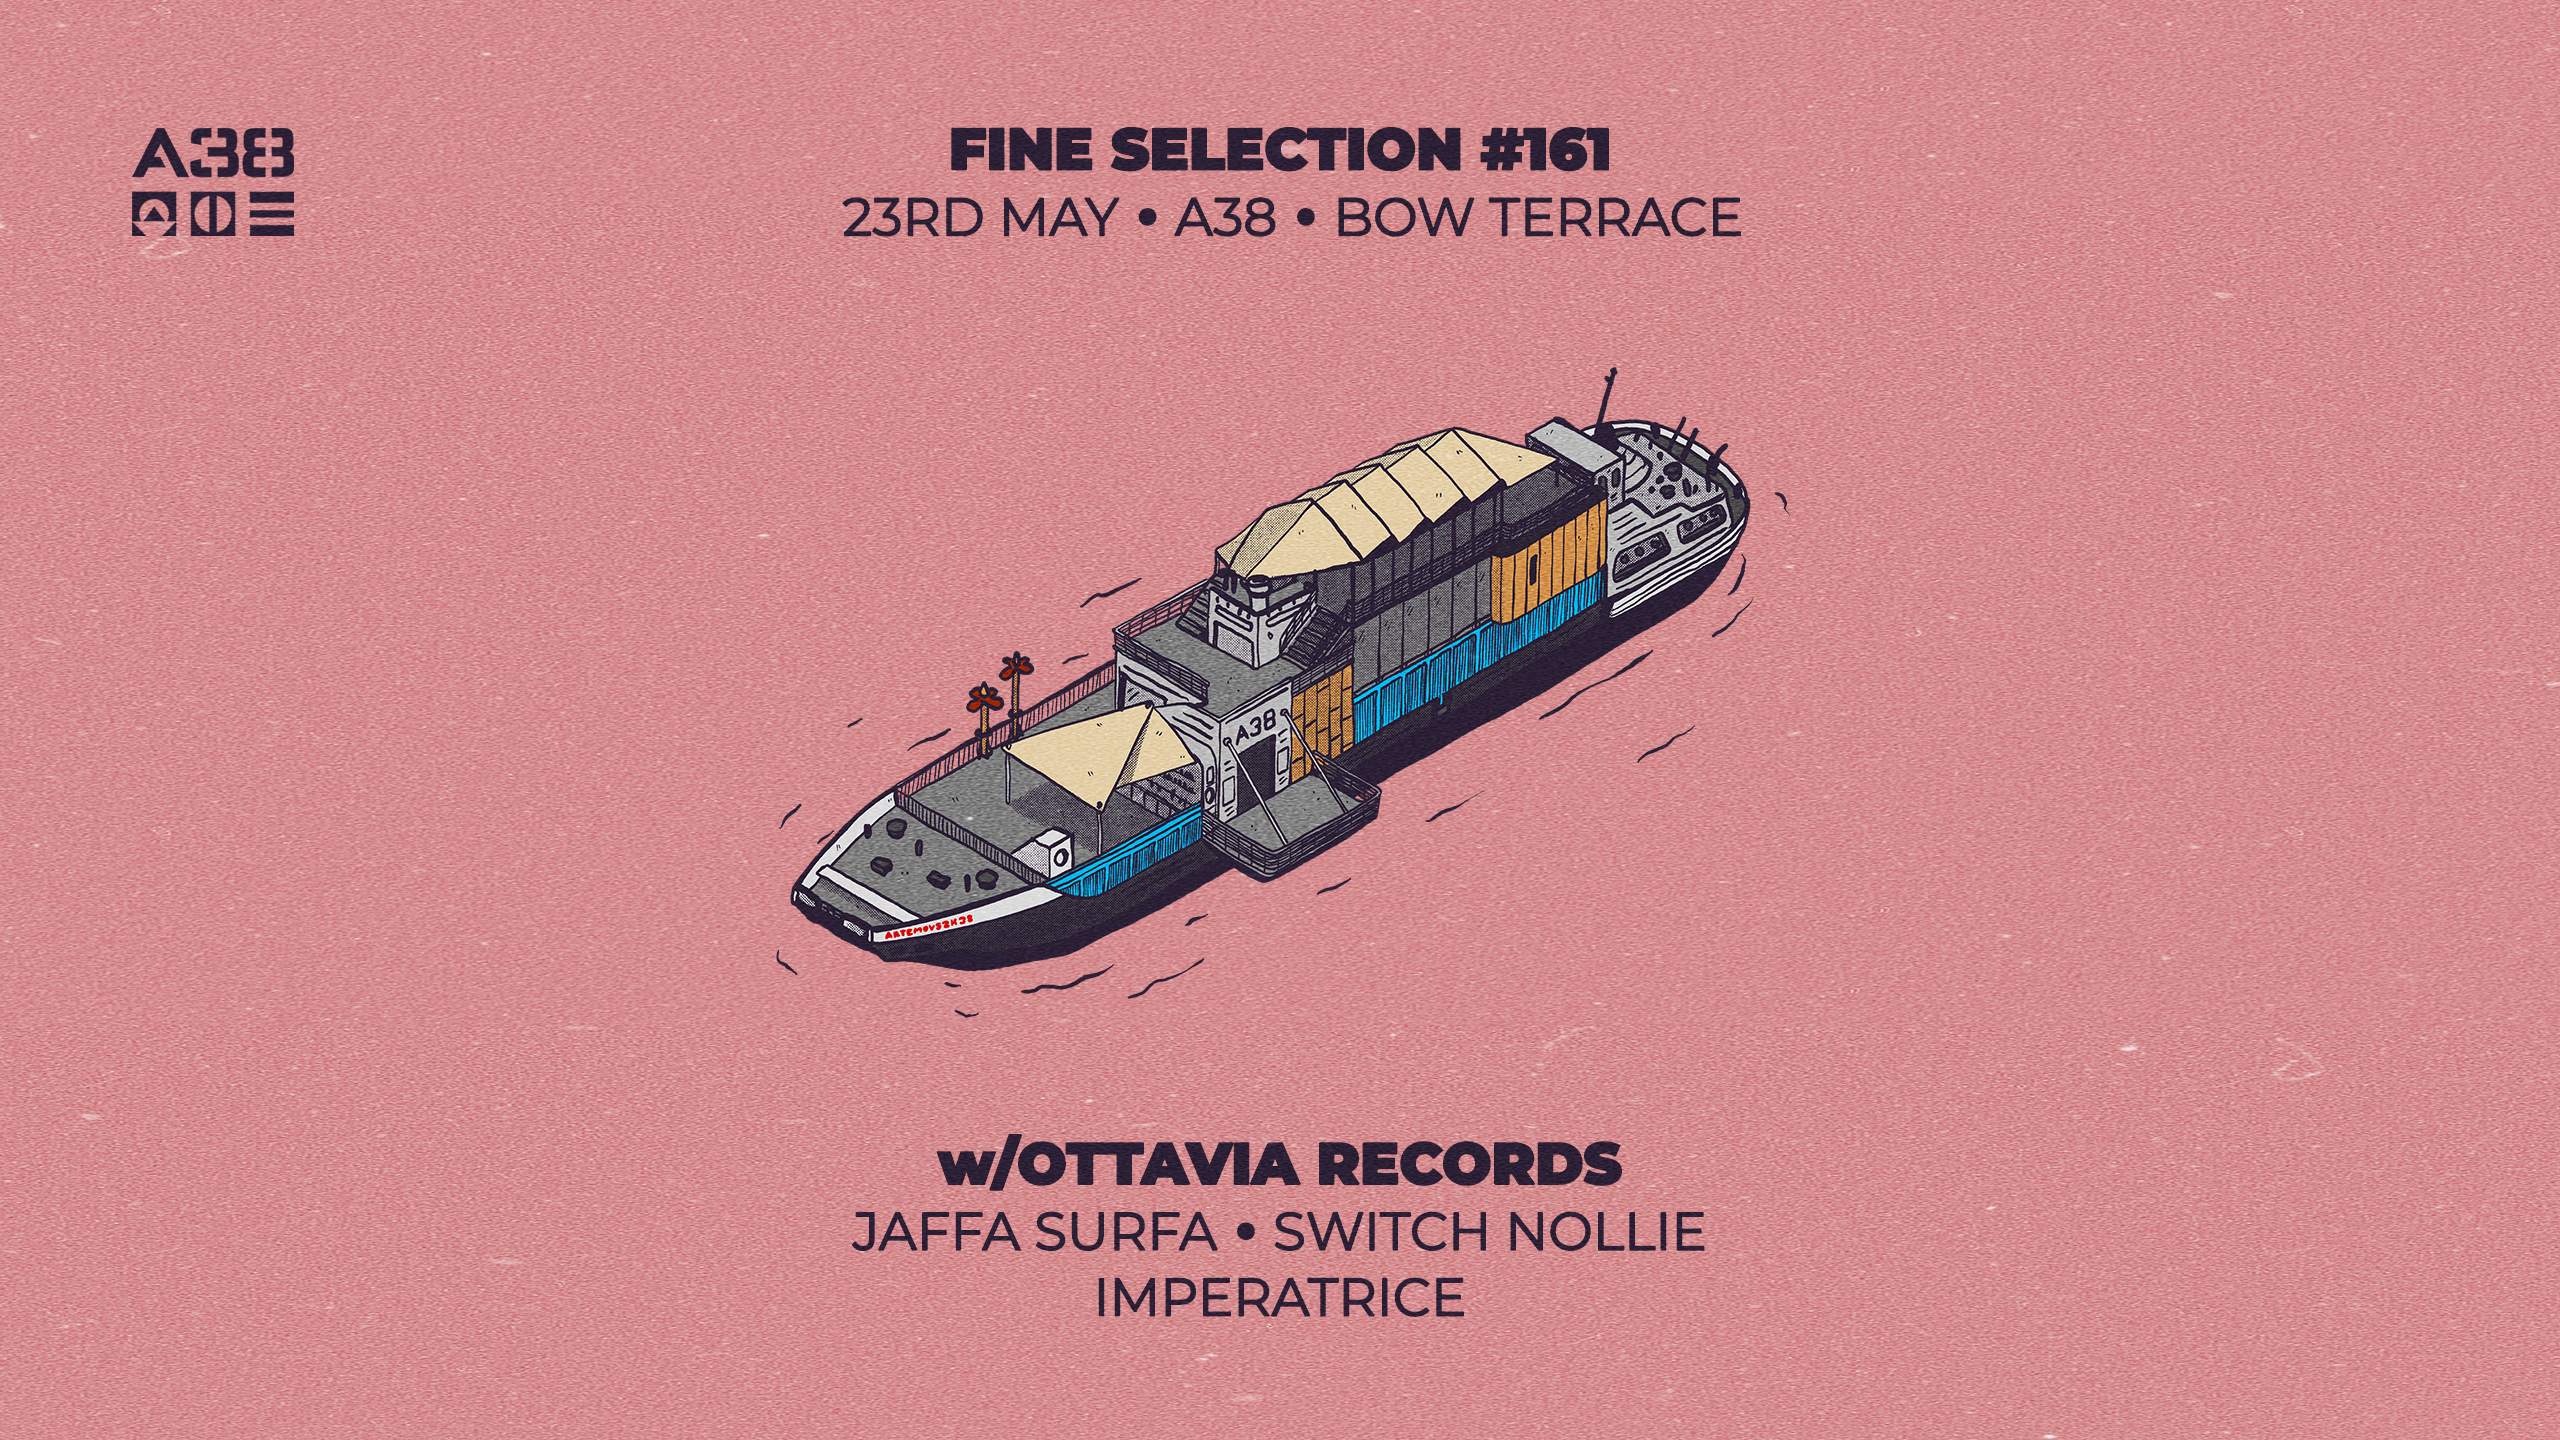 Fine Selection #161 w/Ottavia Records - Página frontal